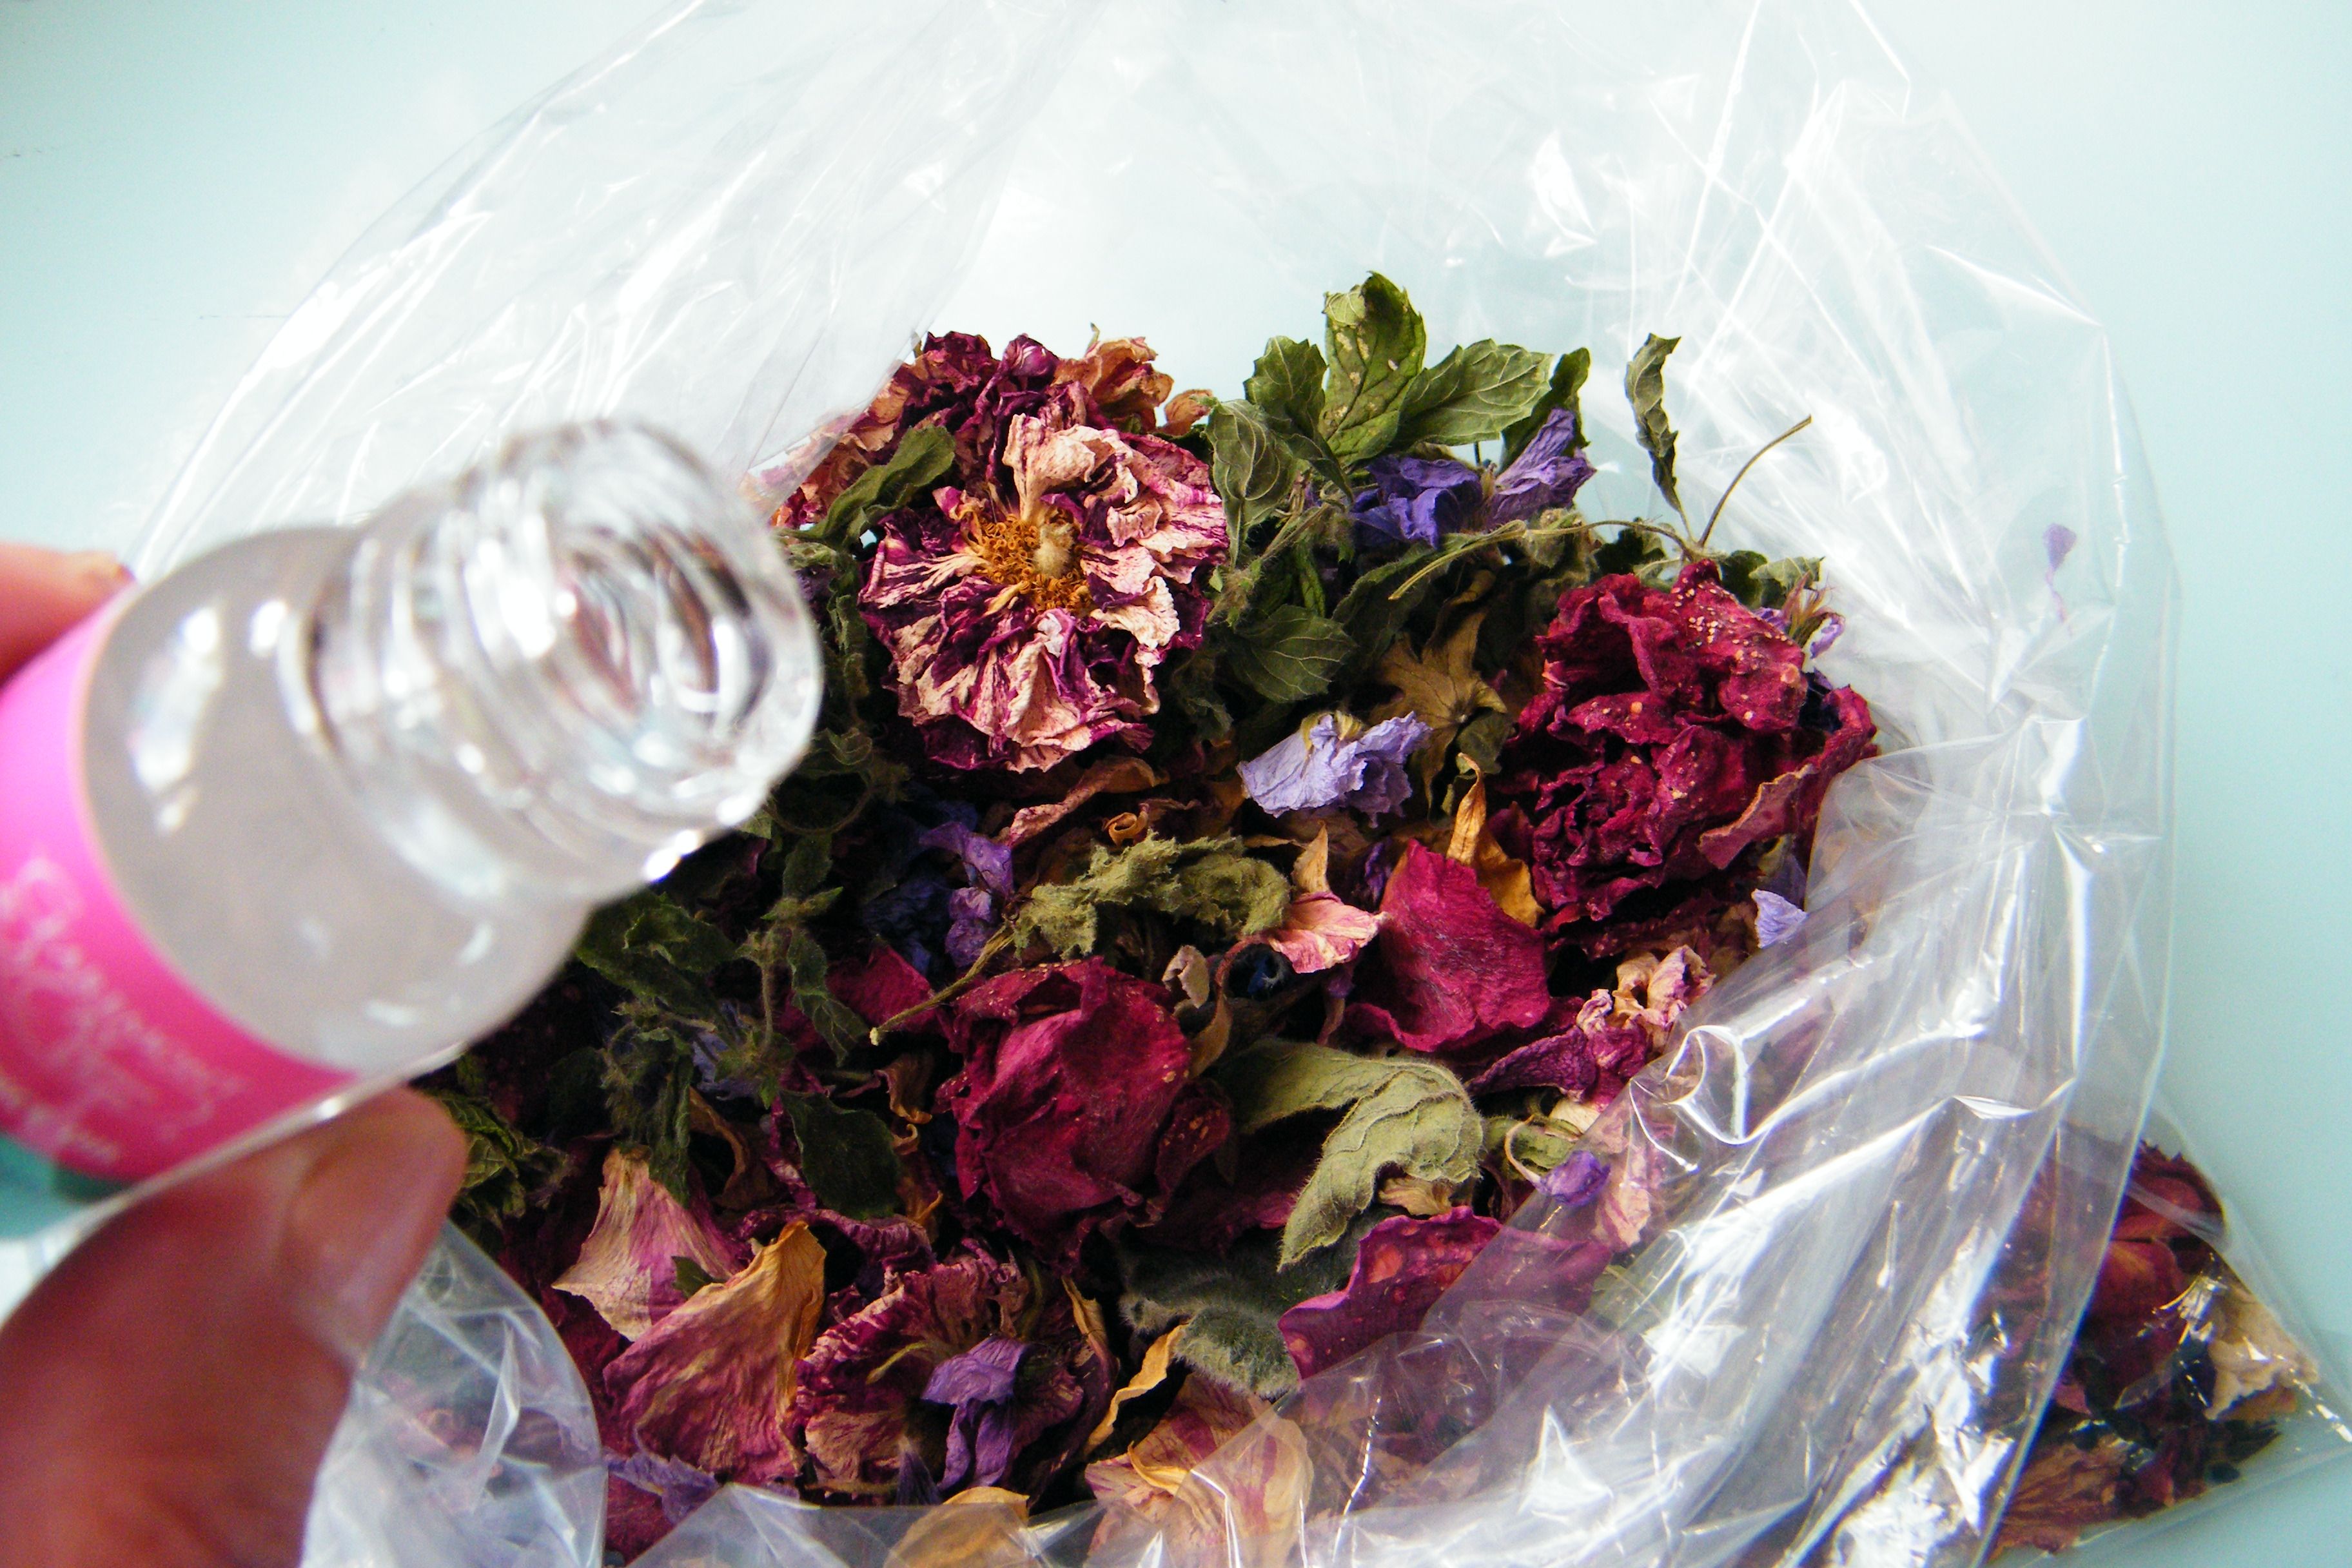 fragance dried flowers | Potpourri | Pinterest | Potpourri, Crafty ...